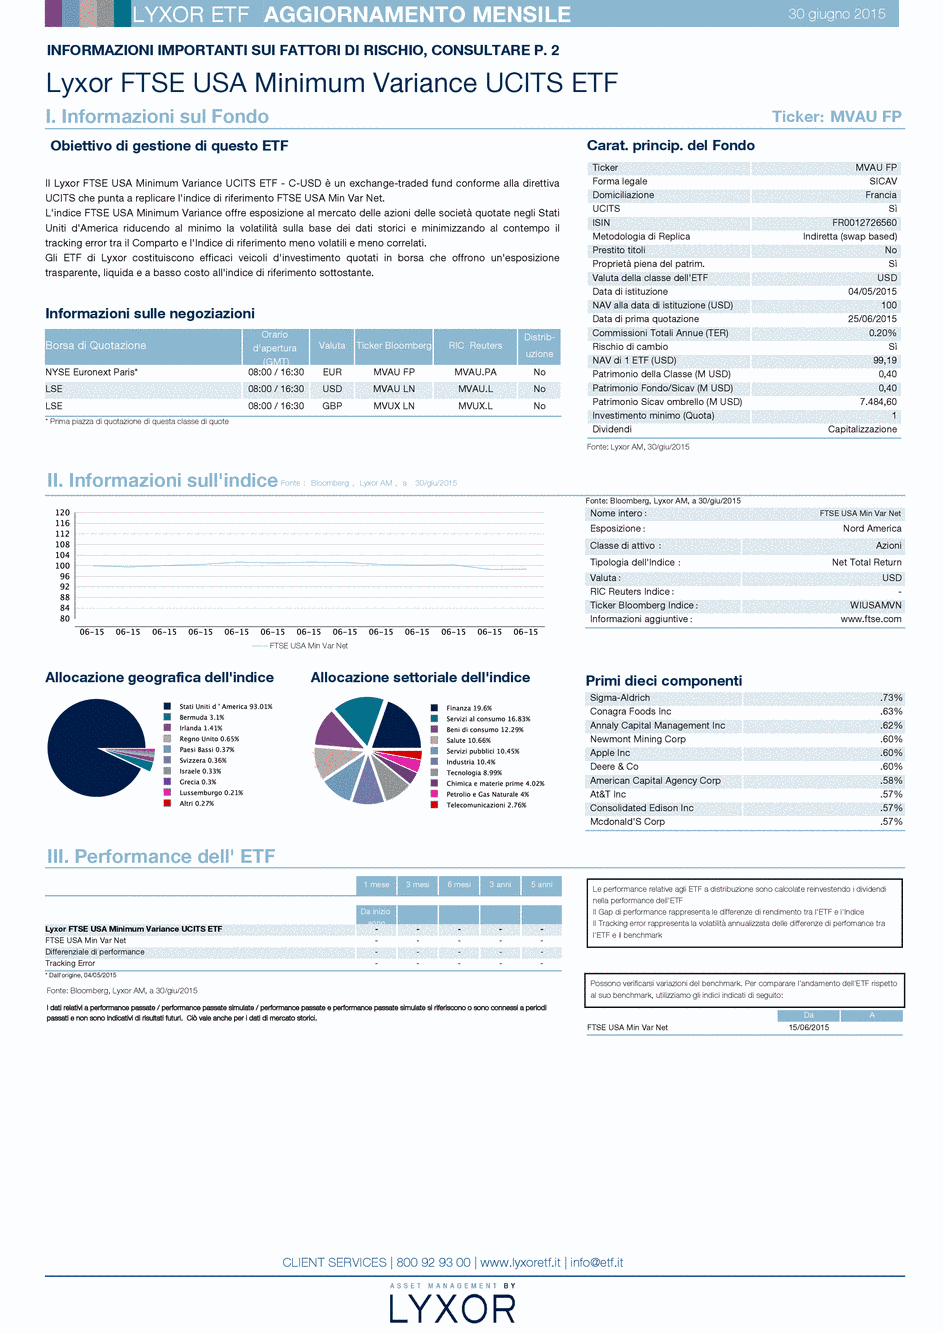 Reporting LYXOR FTSE USA MINIMUM VARIANCE UCITS ETF - C-USD - 30/06/2015 - Italien